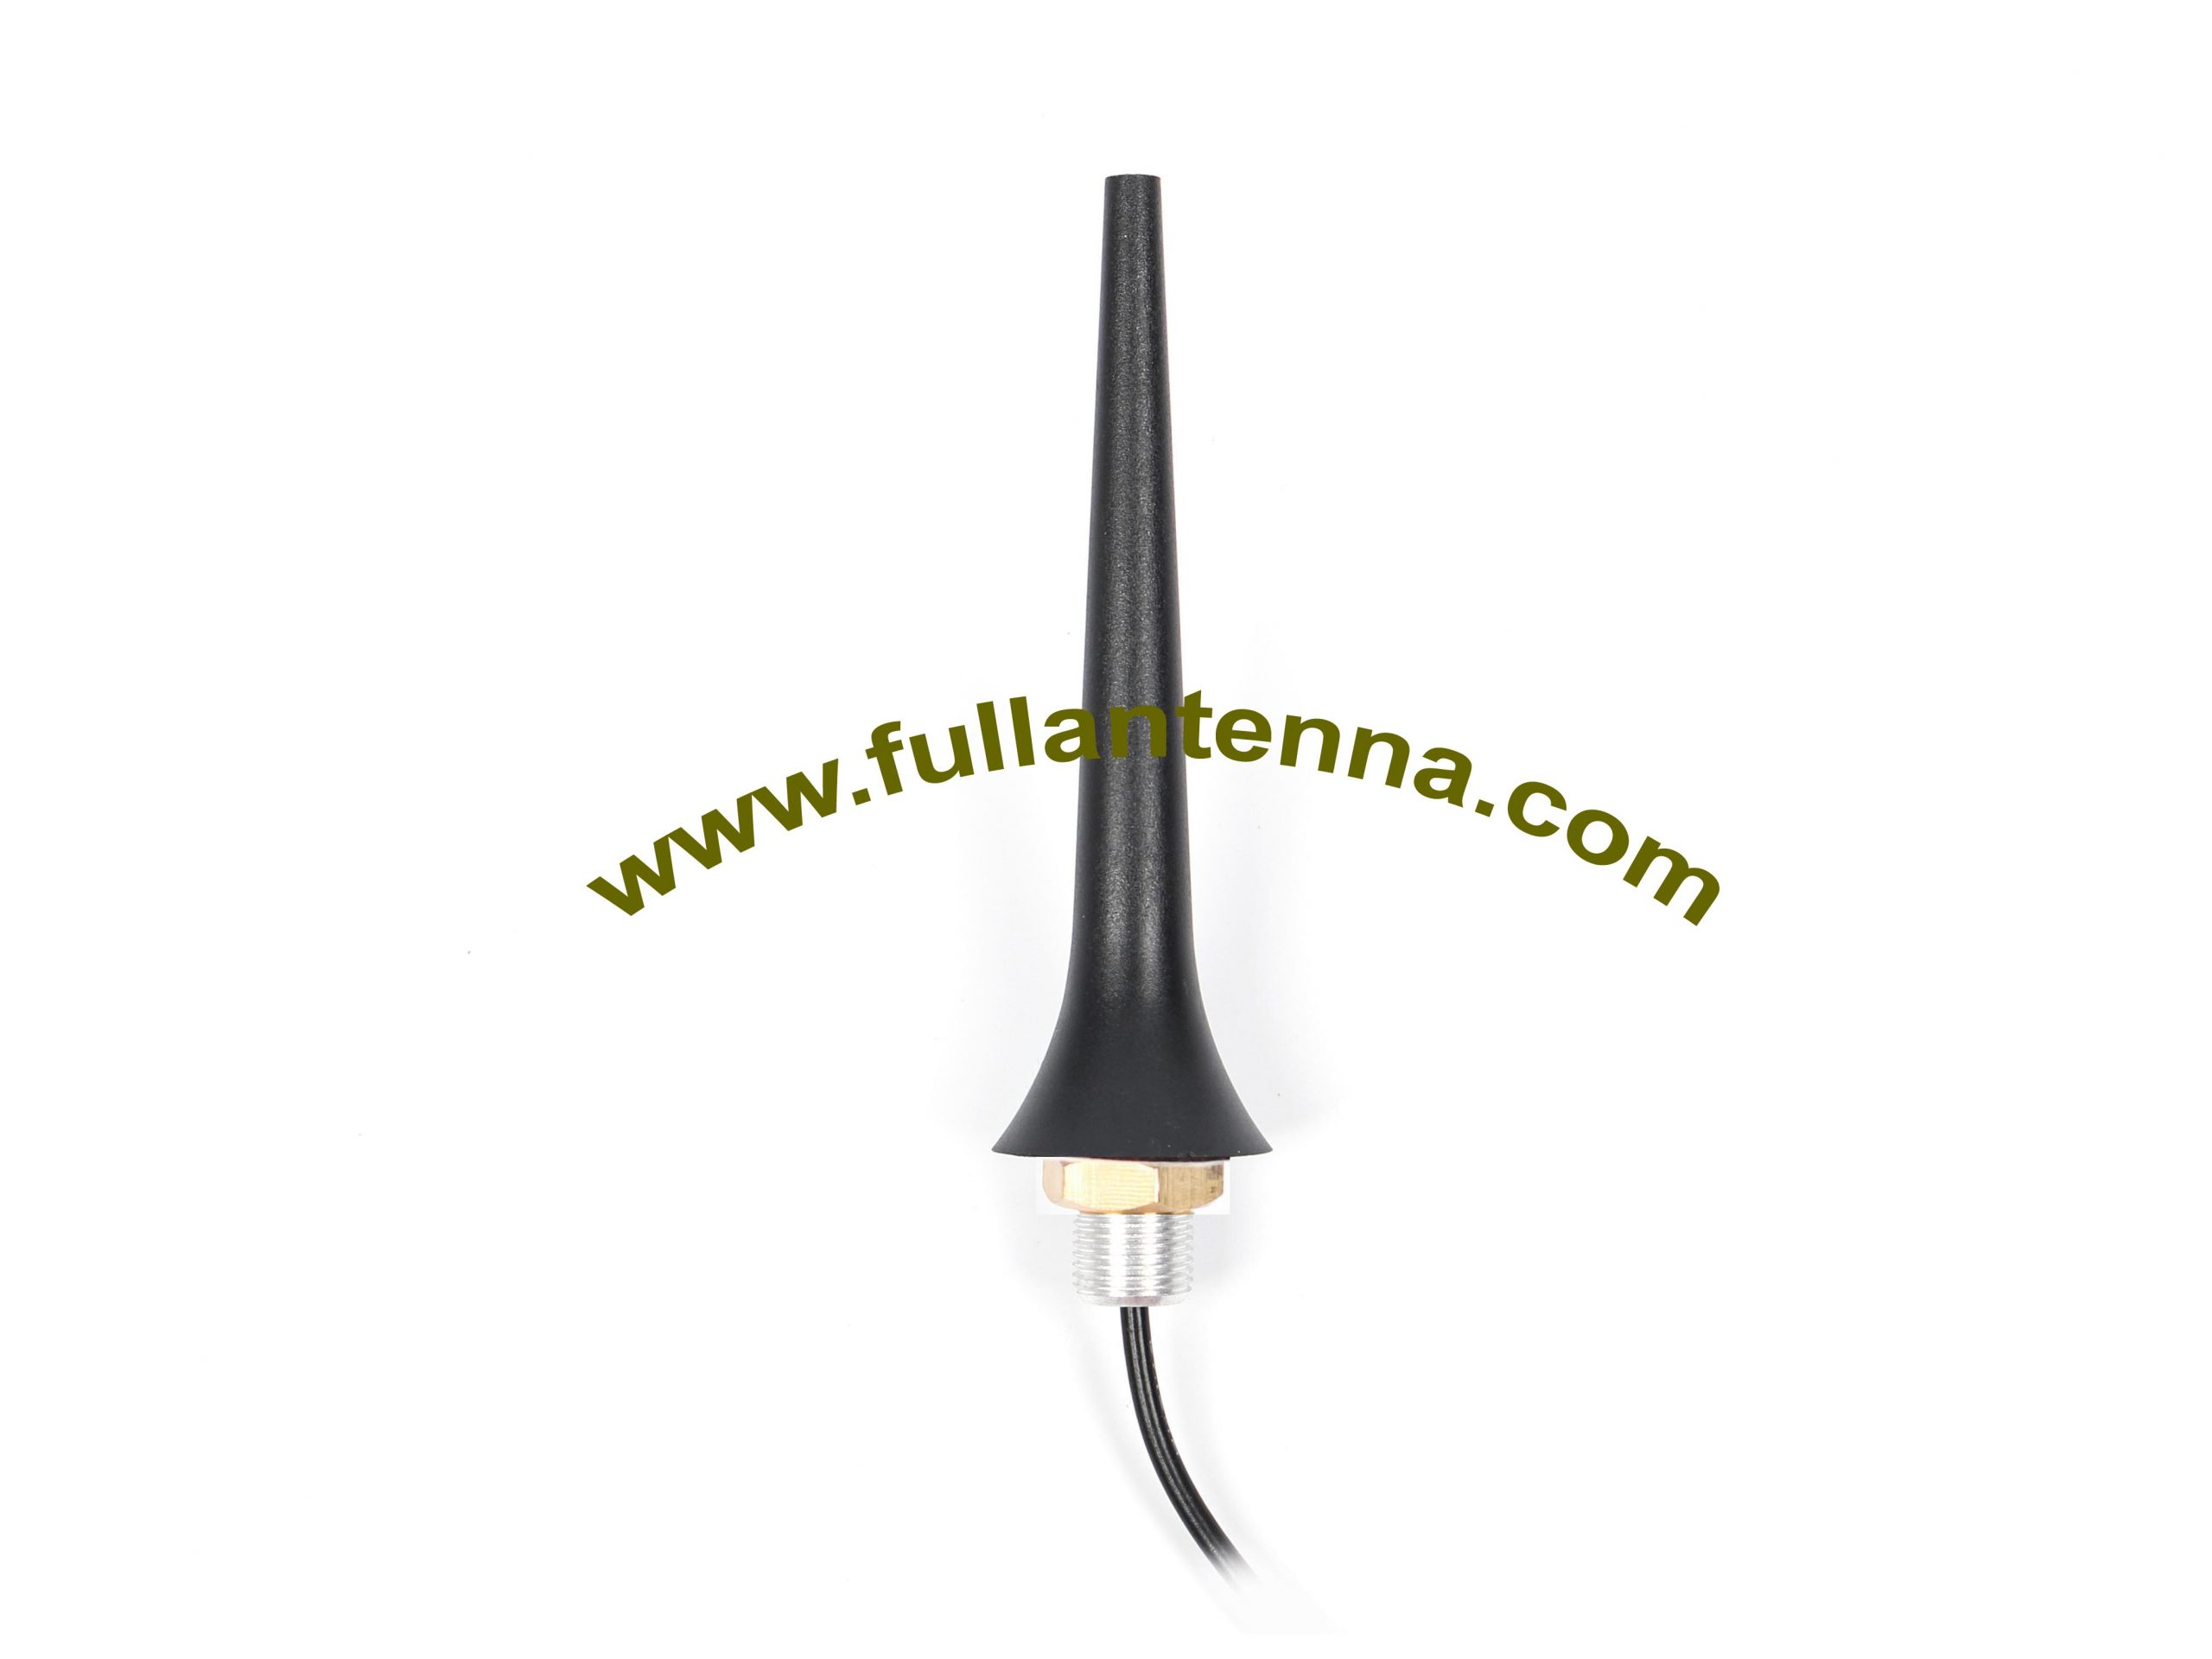 P / N: Antena externa FA3G.11,3G, montaje de tornillo de antena exterior 3G